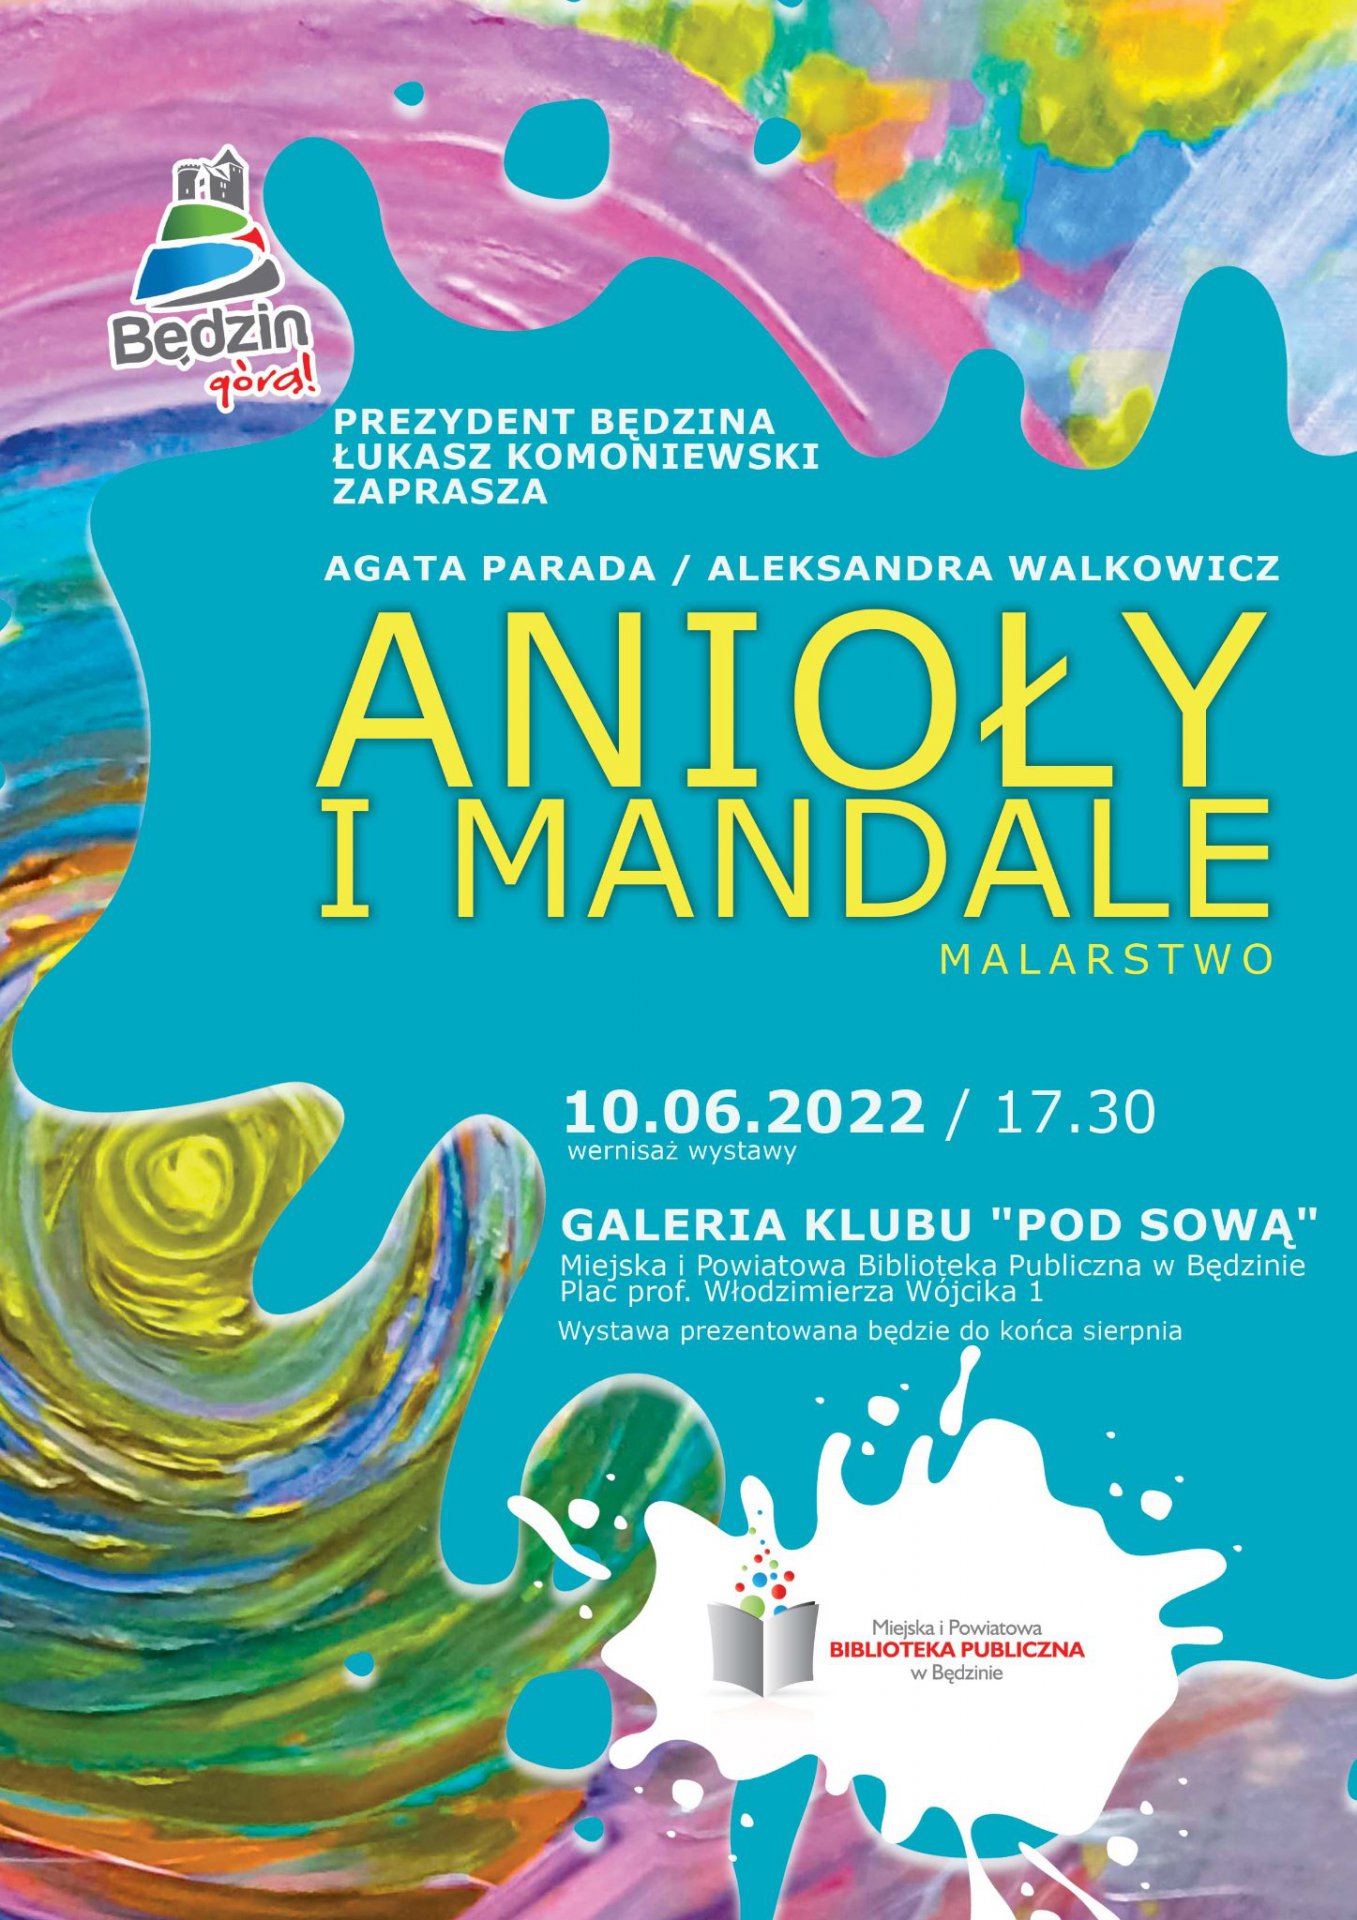 anioly-mandale_pl